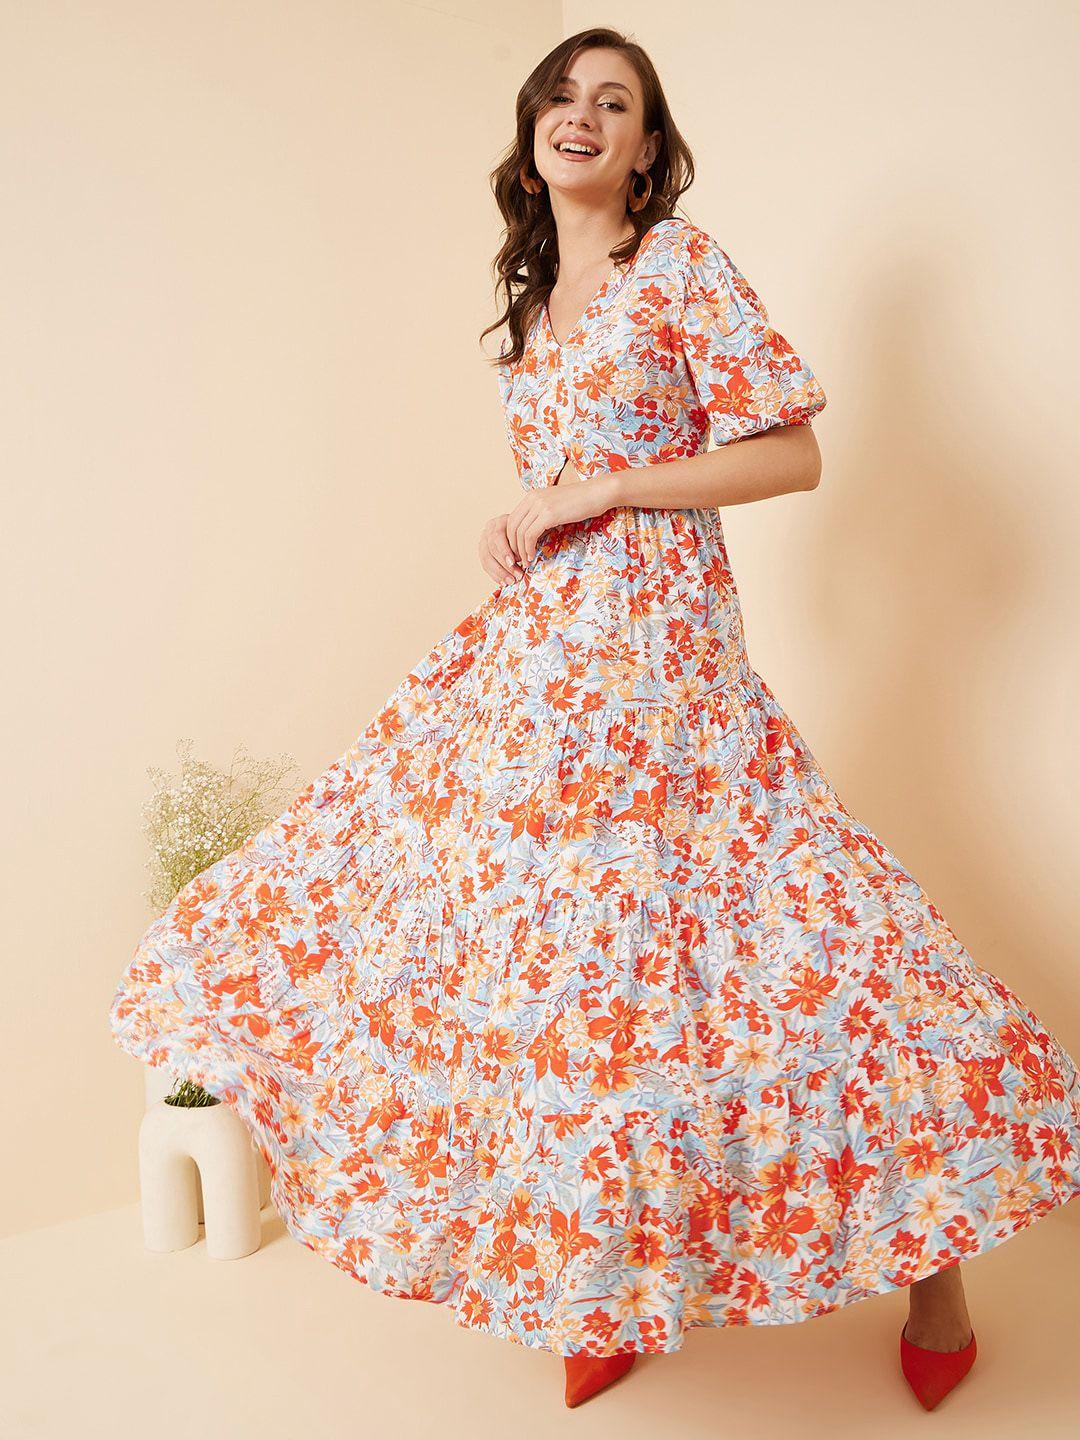 marie claire orange floral printed maxi dress